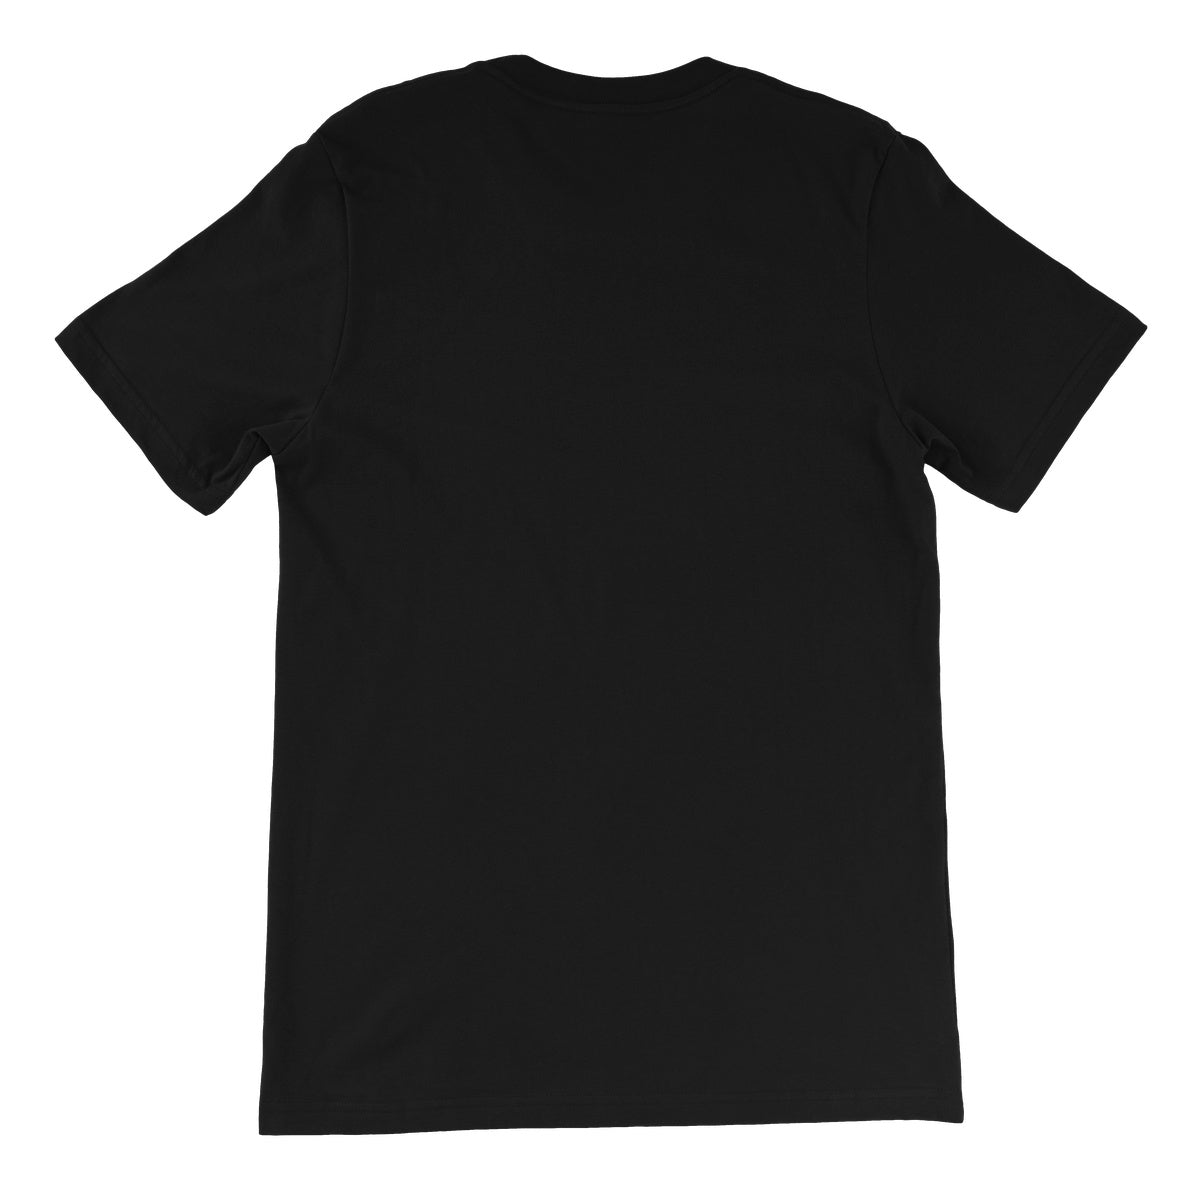 Bound For Glory 2020 - Deonna Unisex Short Sleeve T-Shirt